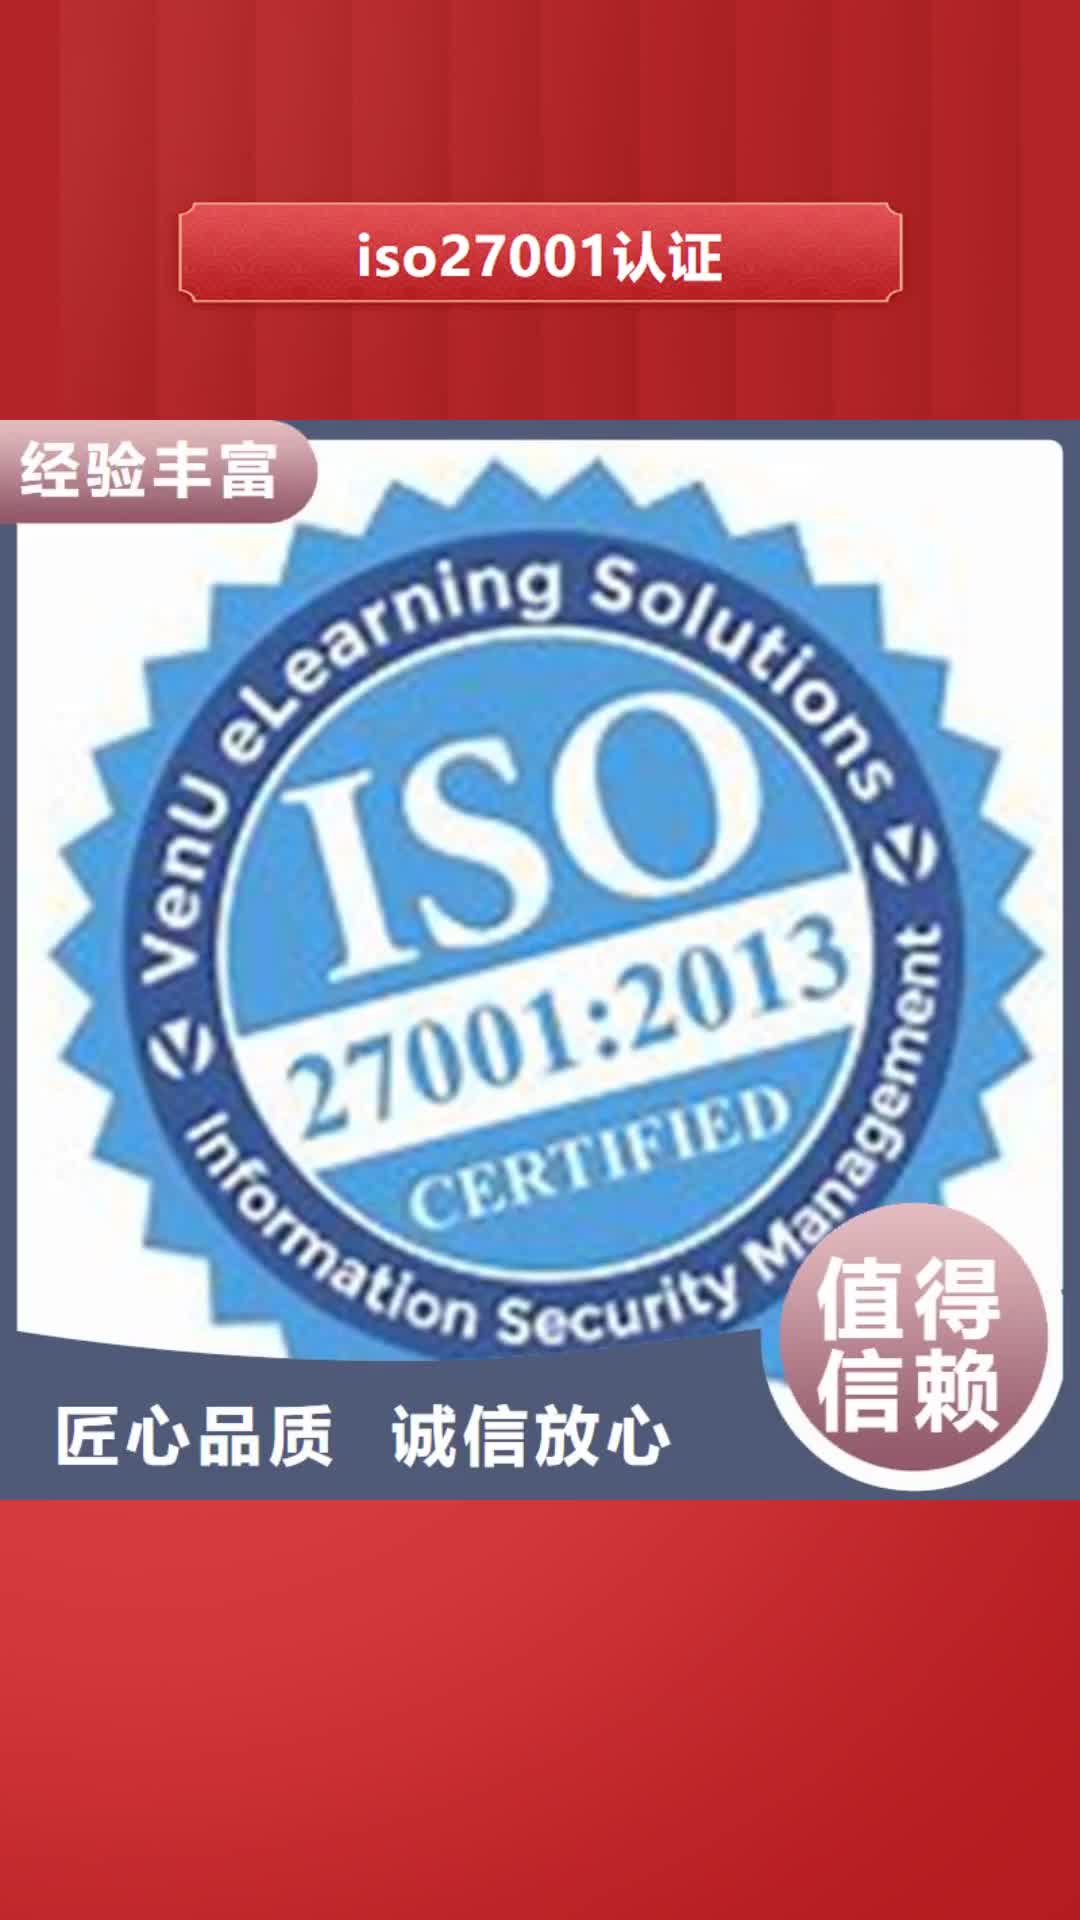 河南【iso27001认证】,ISO14000\ESD防静电认证服务热情